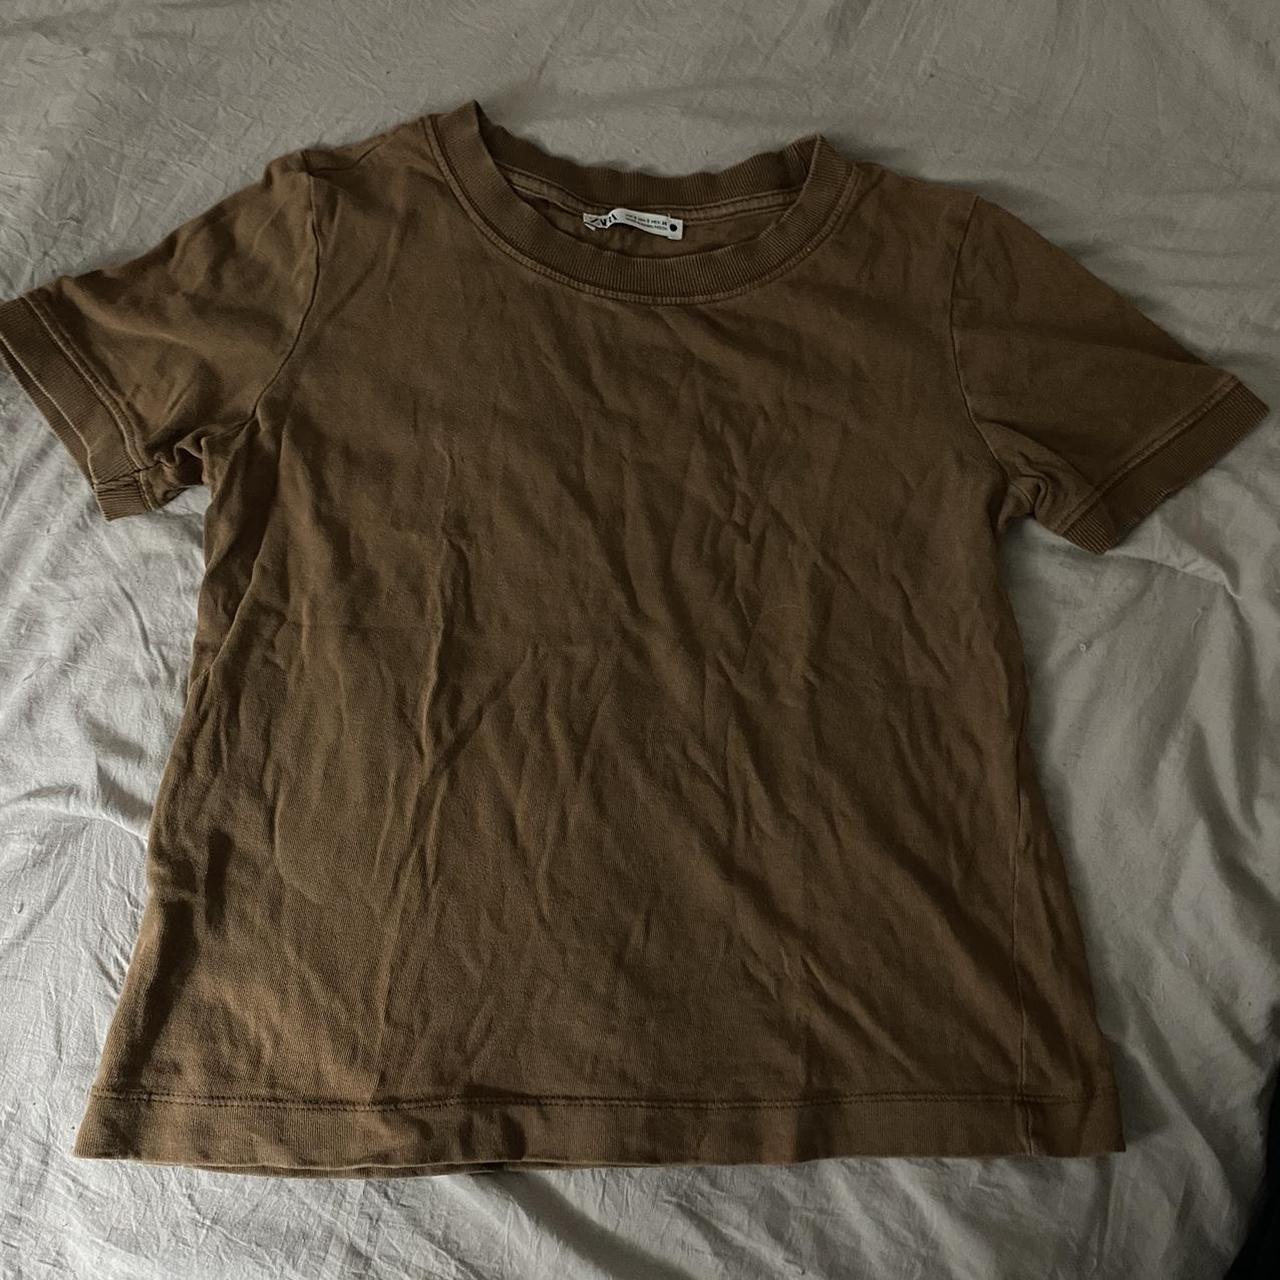 Zara Women's Brown T-shirt